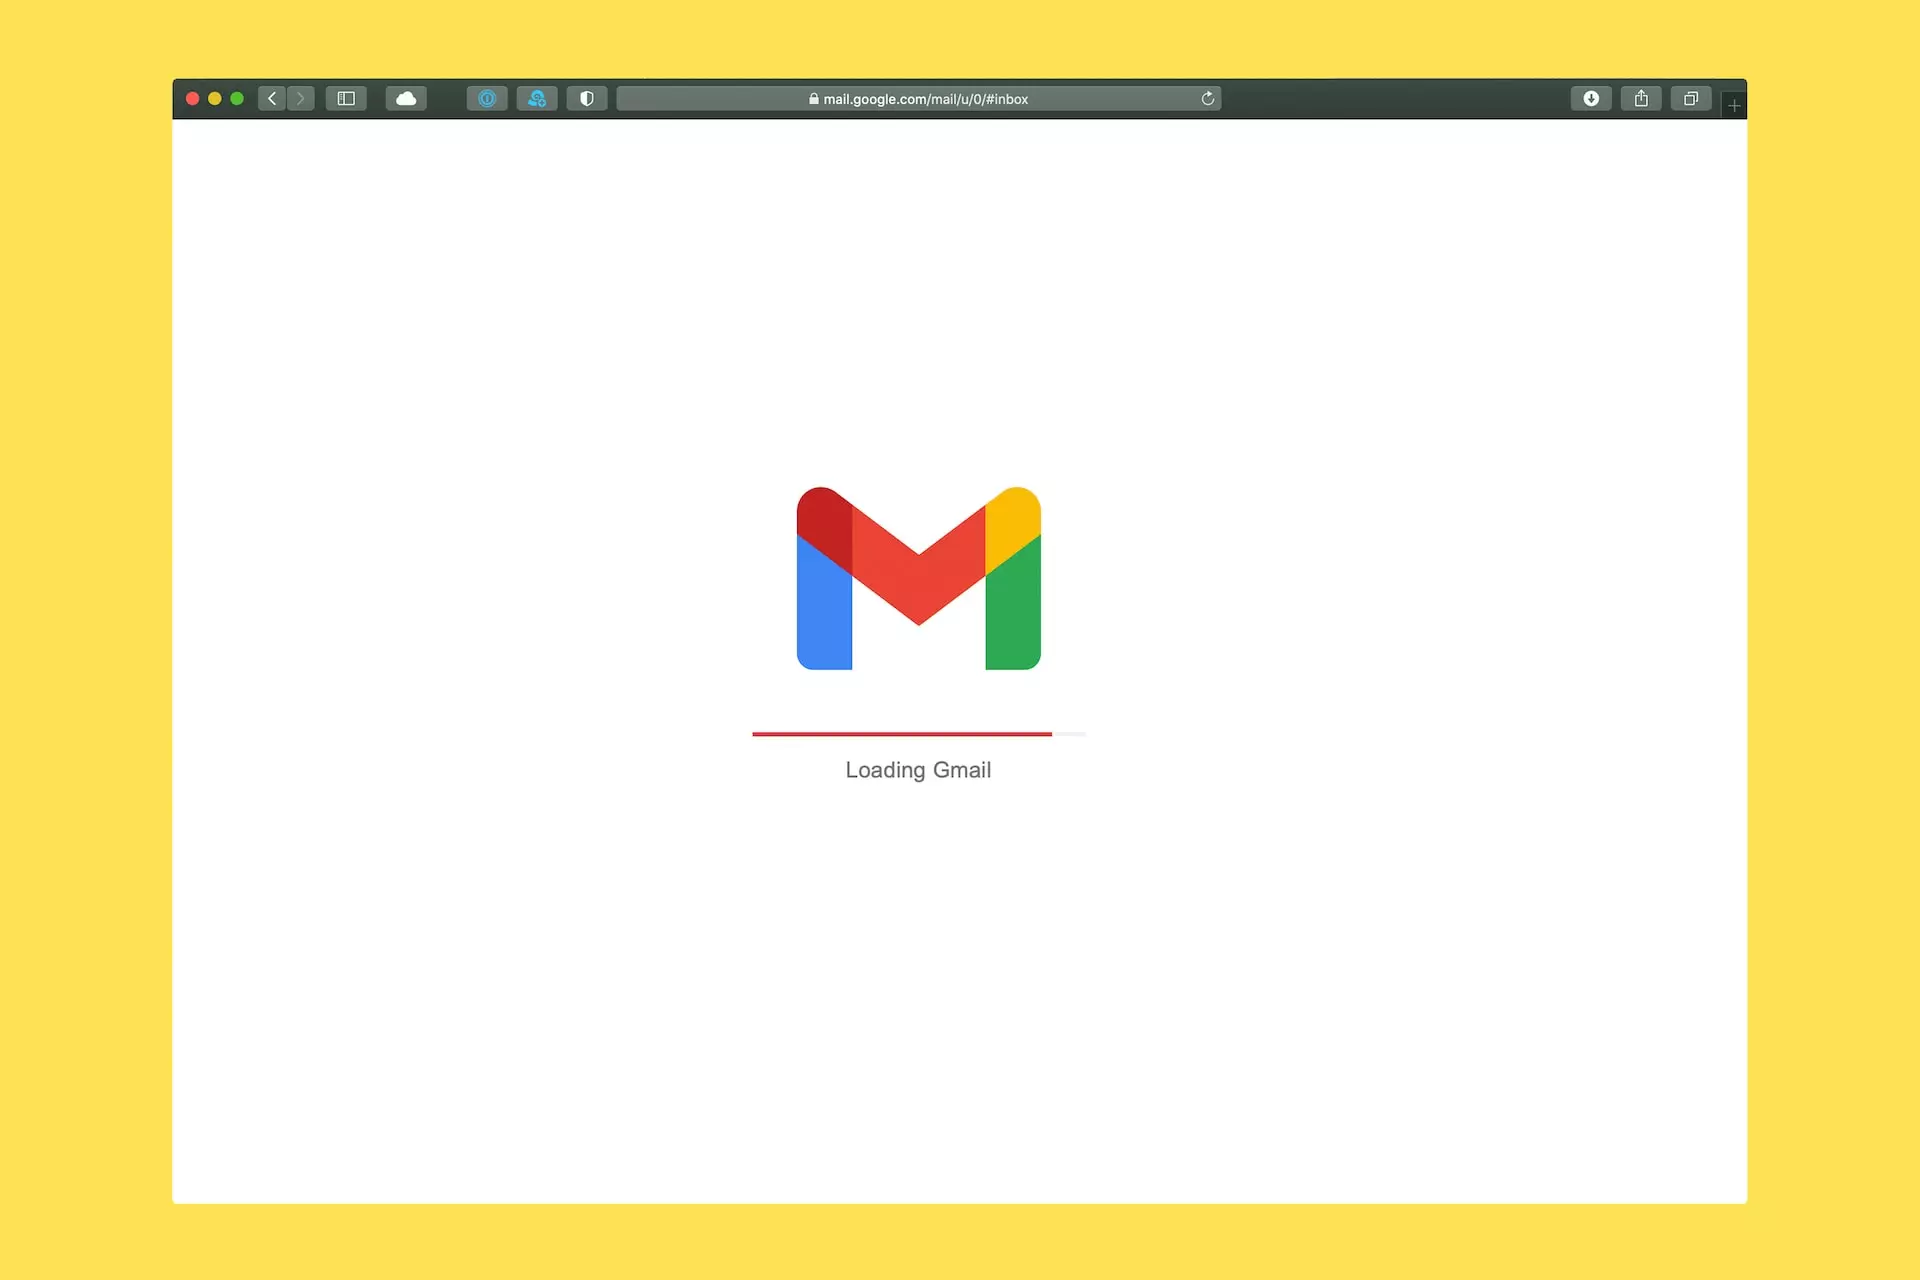 screenshot of Gmail desktop application loading page